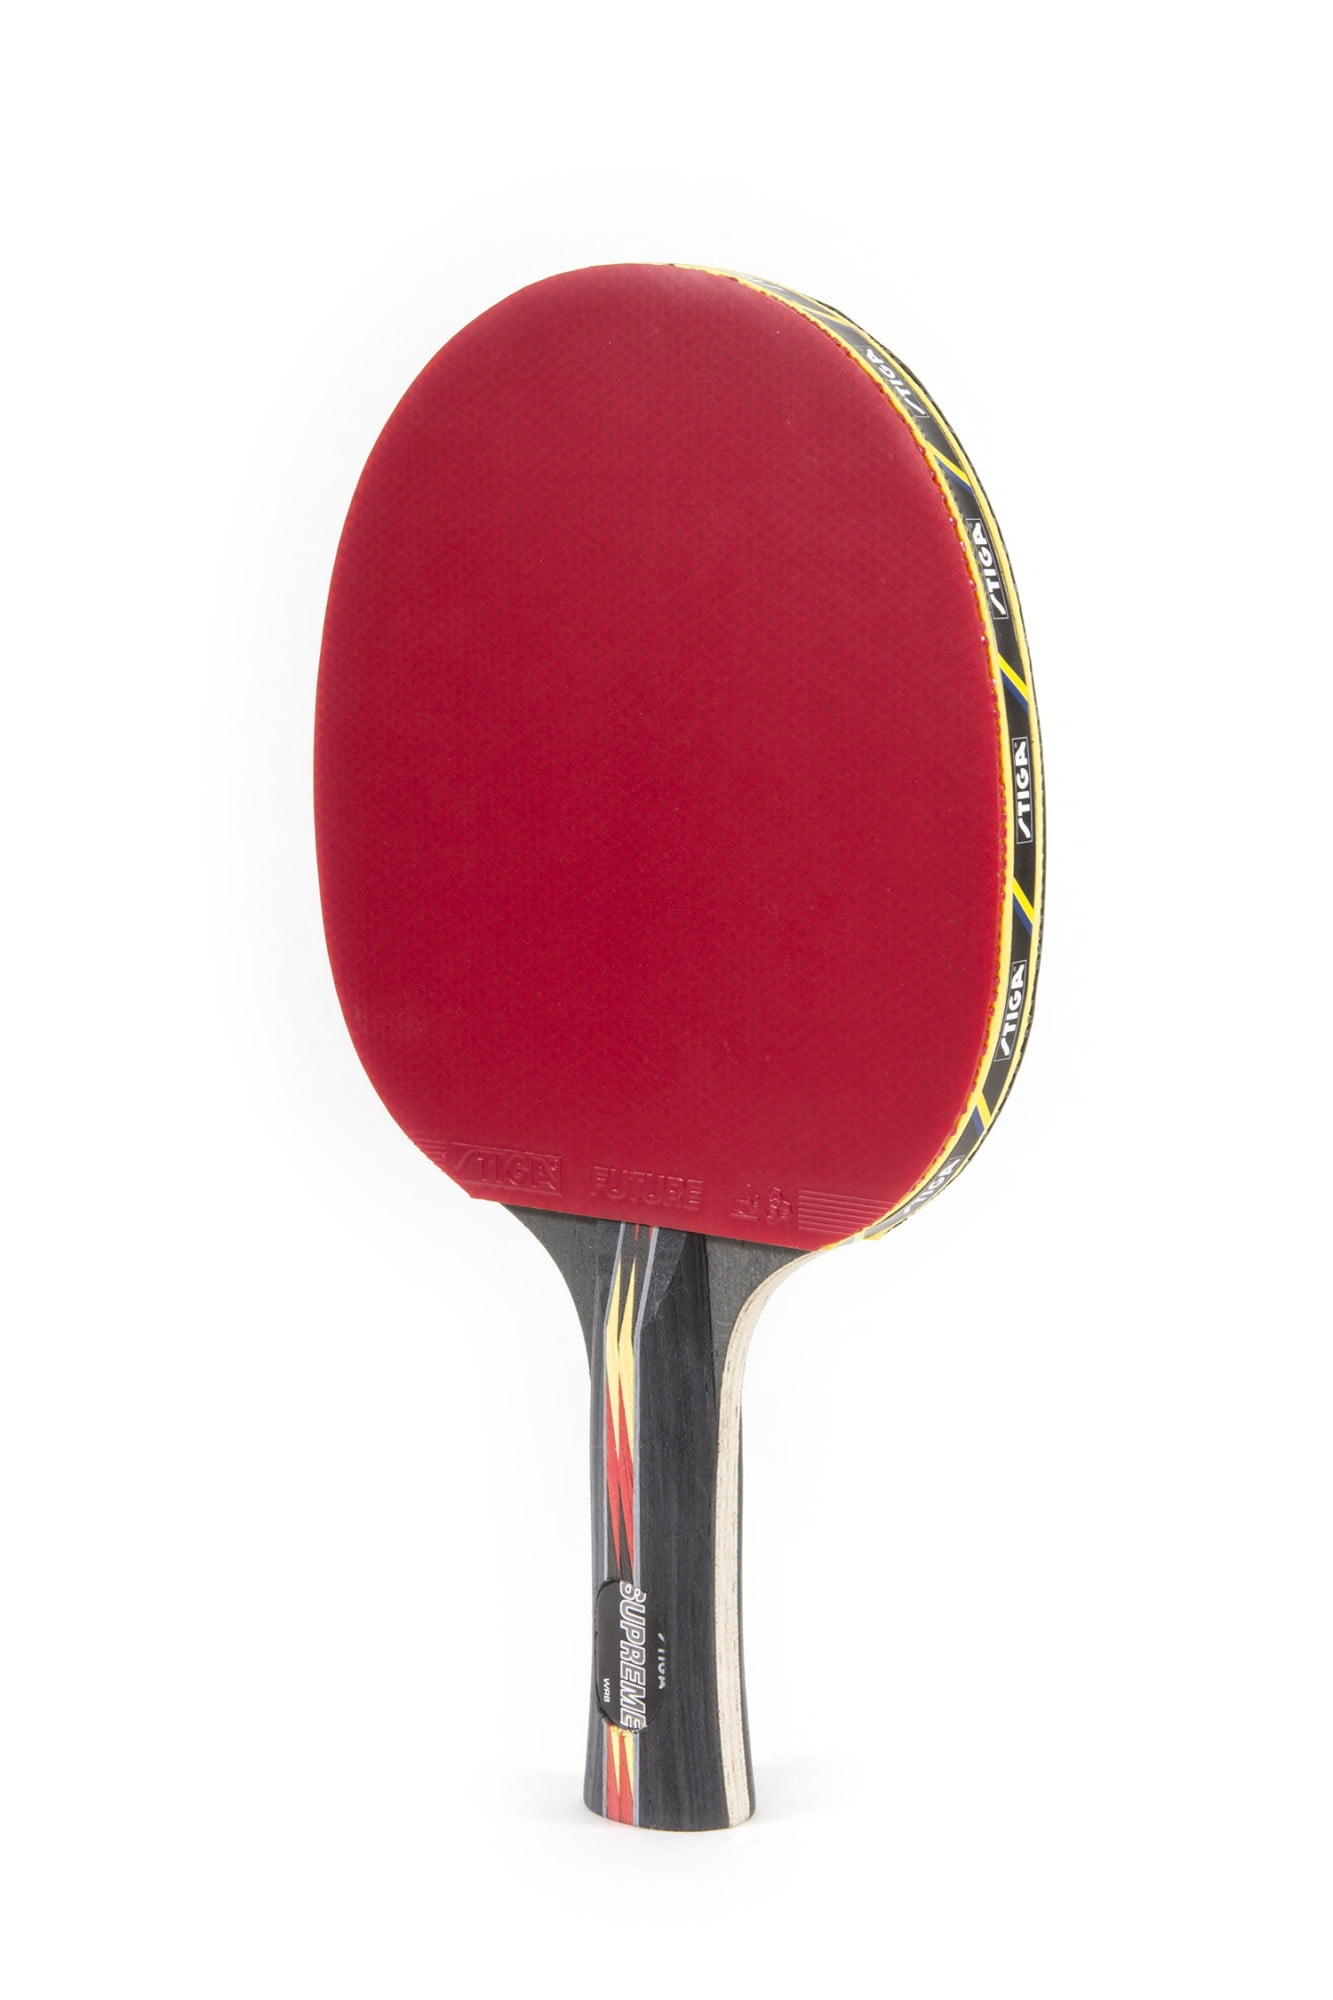 Stiga Pro Carbon Premium Ping Pong Table Tennis Paddle Racket Titan Tournament 